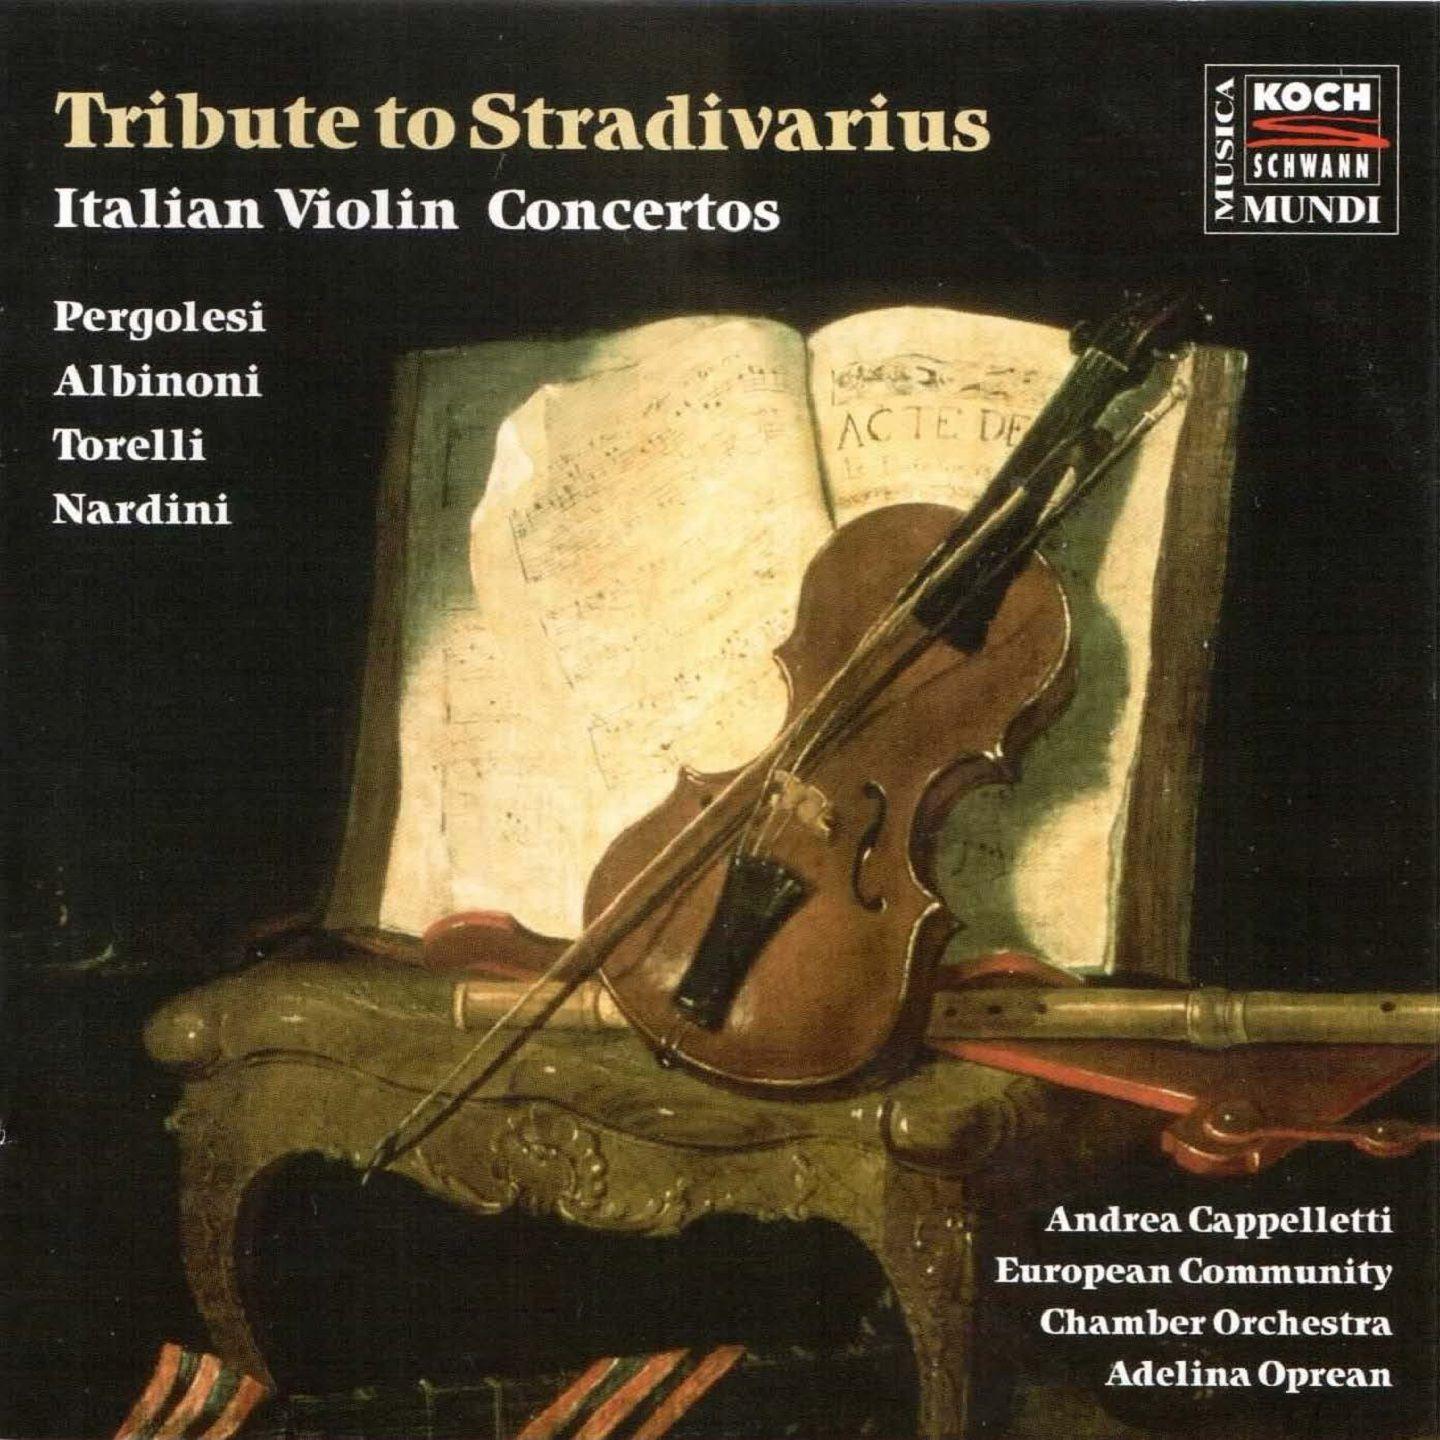 Violin Concerto in F Major, Op. 1 No.3: I. Allegro moderato